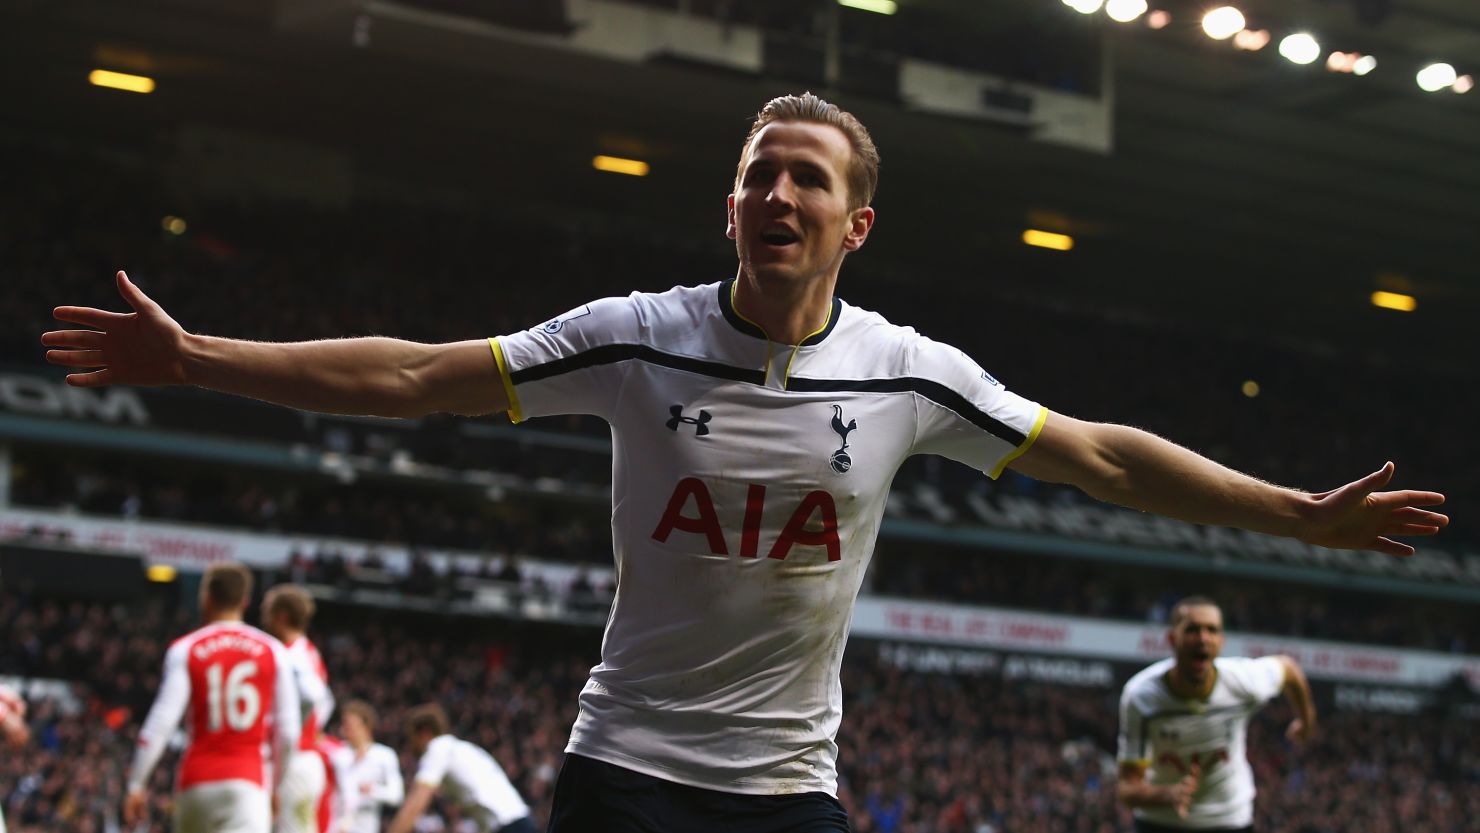 The chants were aimed at Tottenham Hotspur's striker Harry Kane